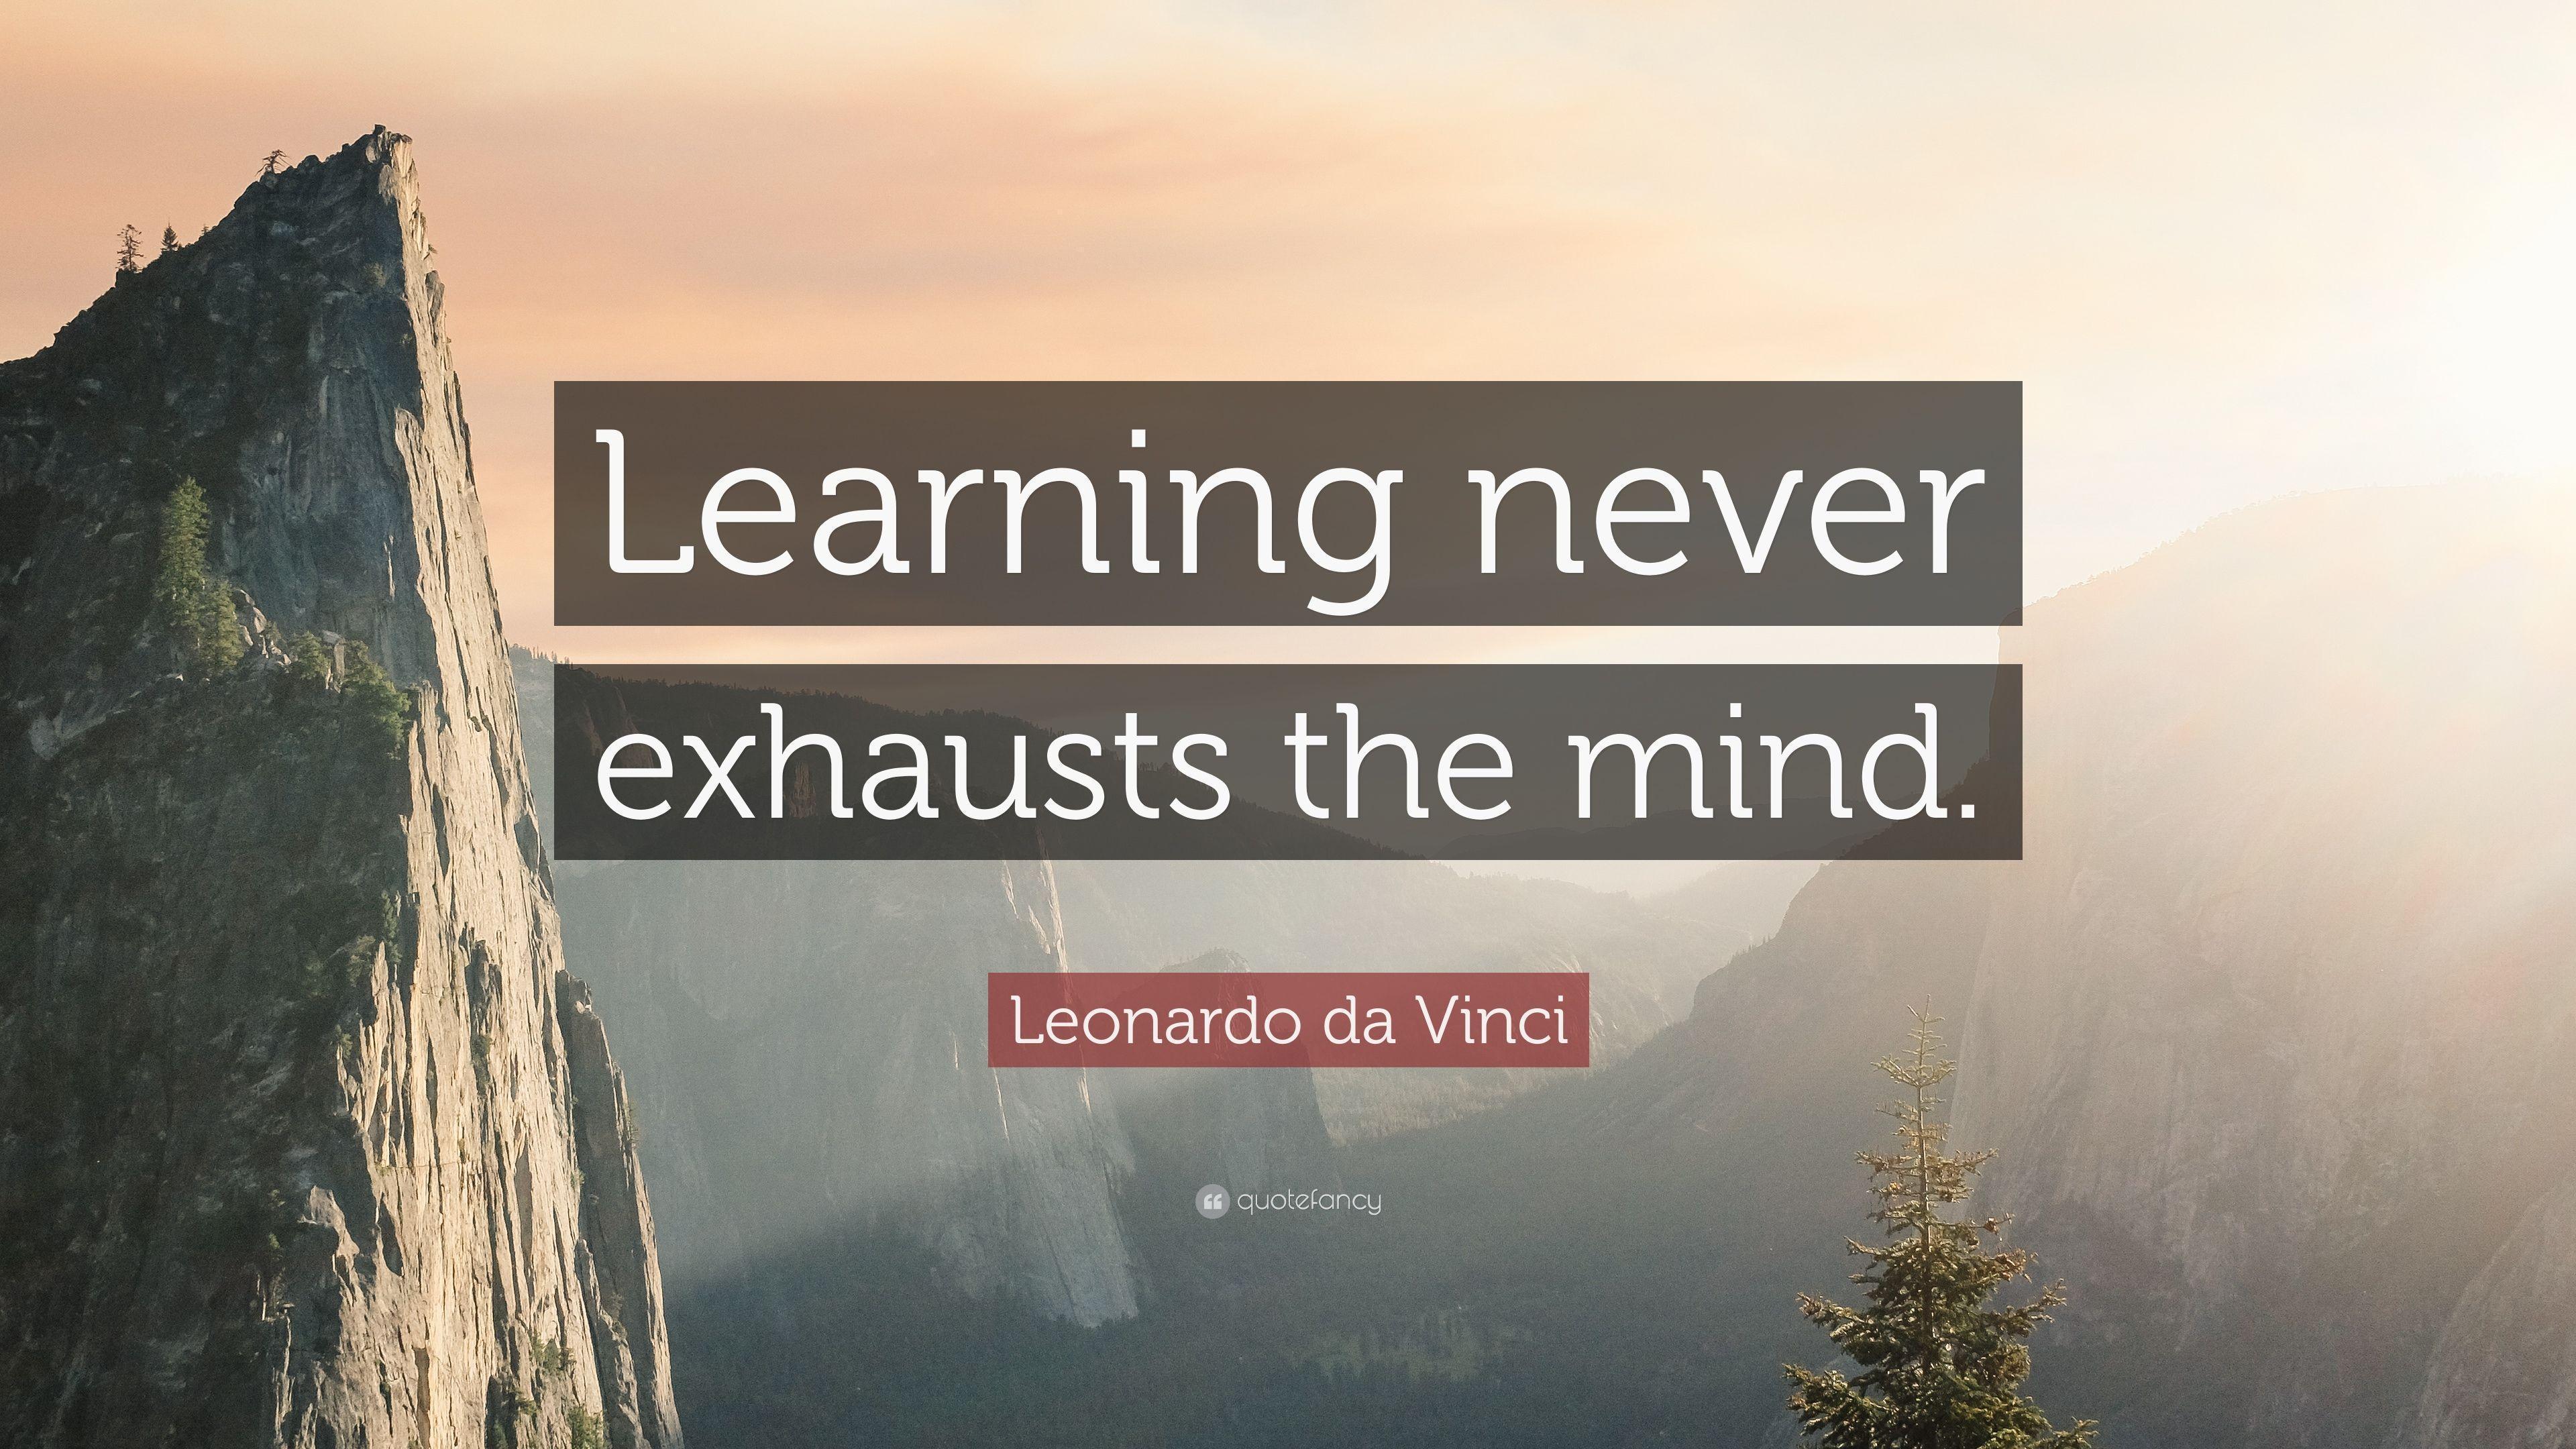 Leonardo da Vinci Quote: “Learning never exhausts the mind.” 12